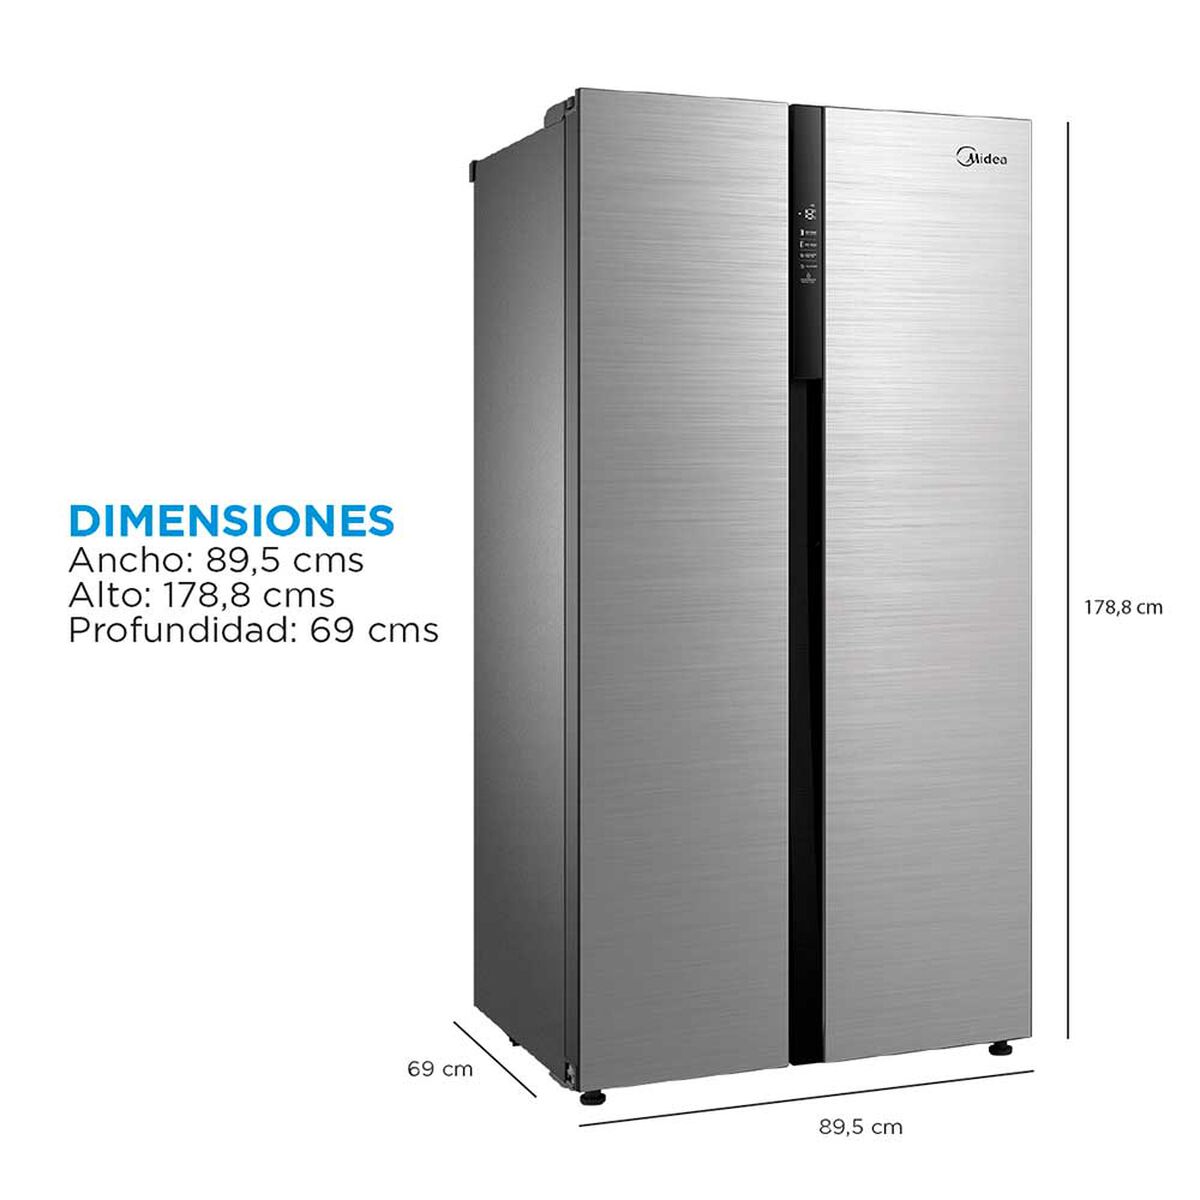 Refrigerador Side by Side Midea MDRS710FGE46 525 lts.